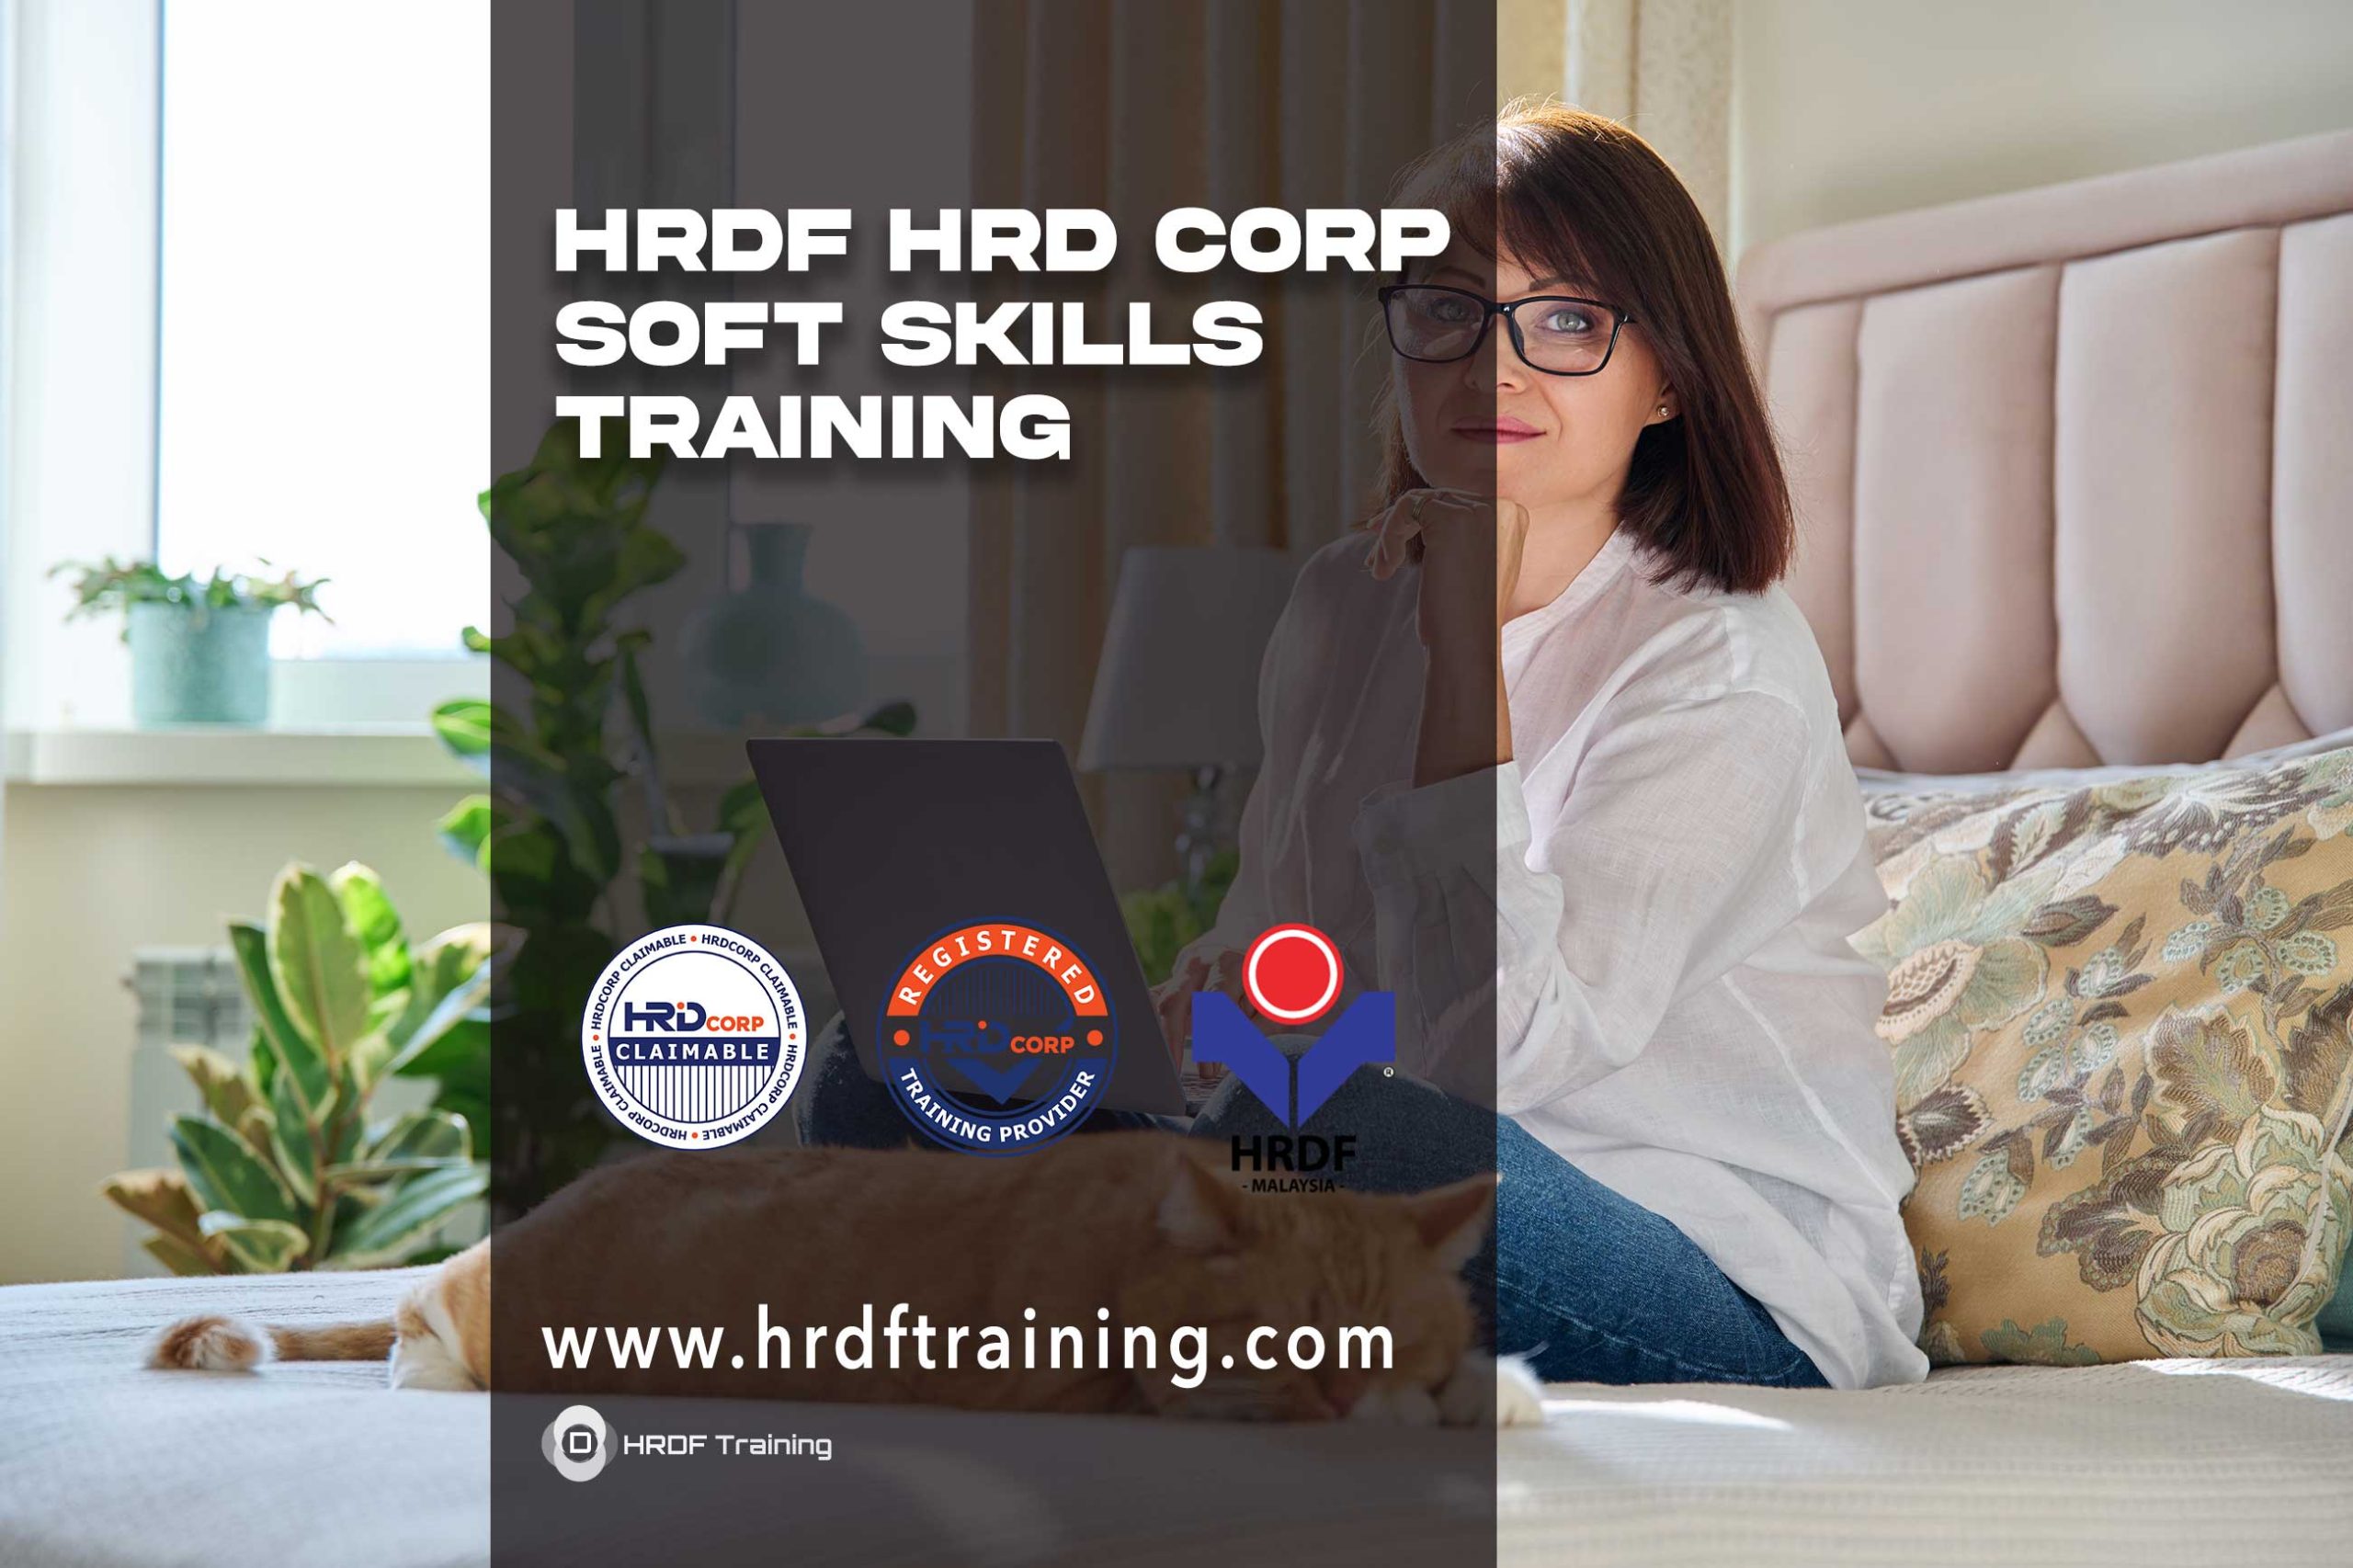 HRDF HRD Corp Soft Skills Training